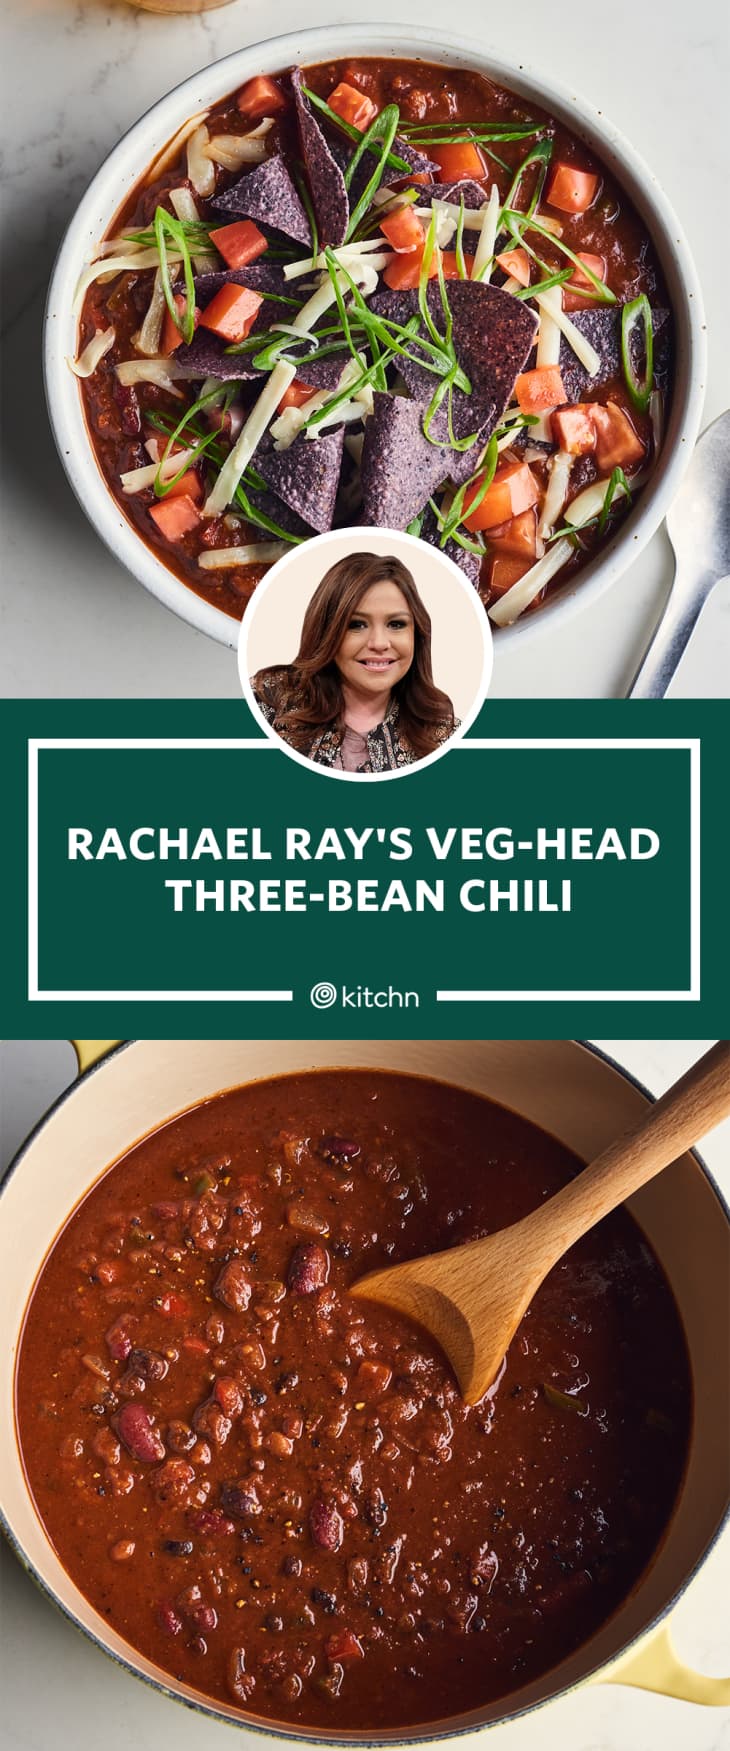 I Tried Rachael Ray's Veg-Head Three-Bean Chili | The Kitchn